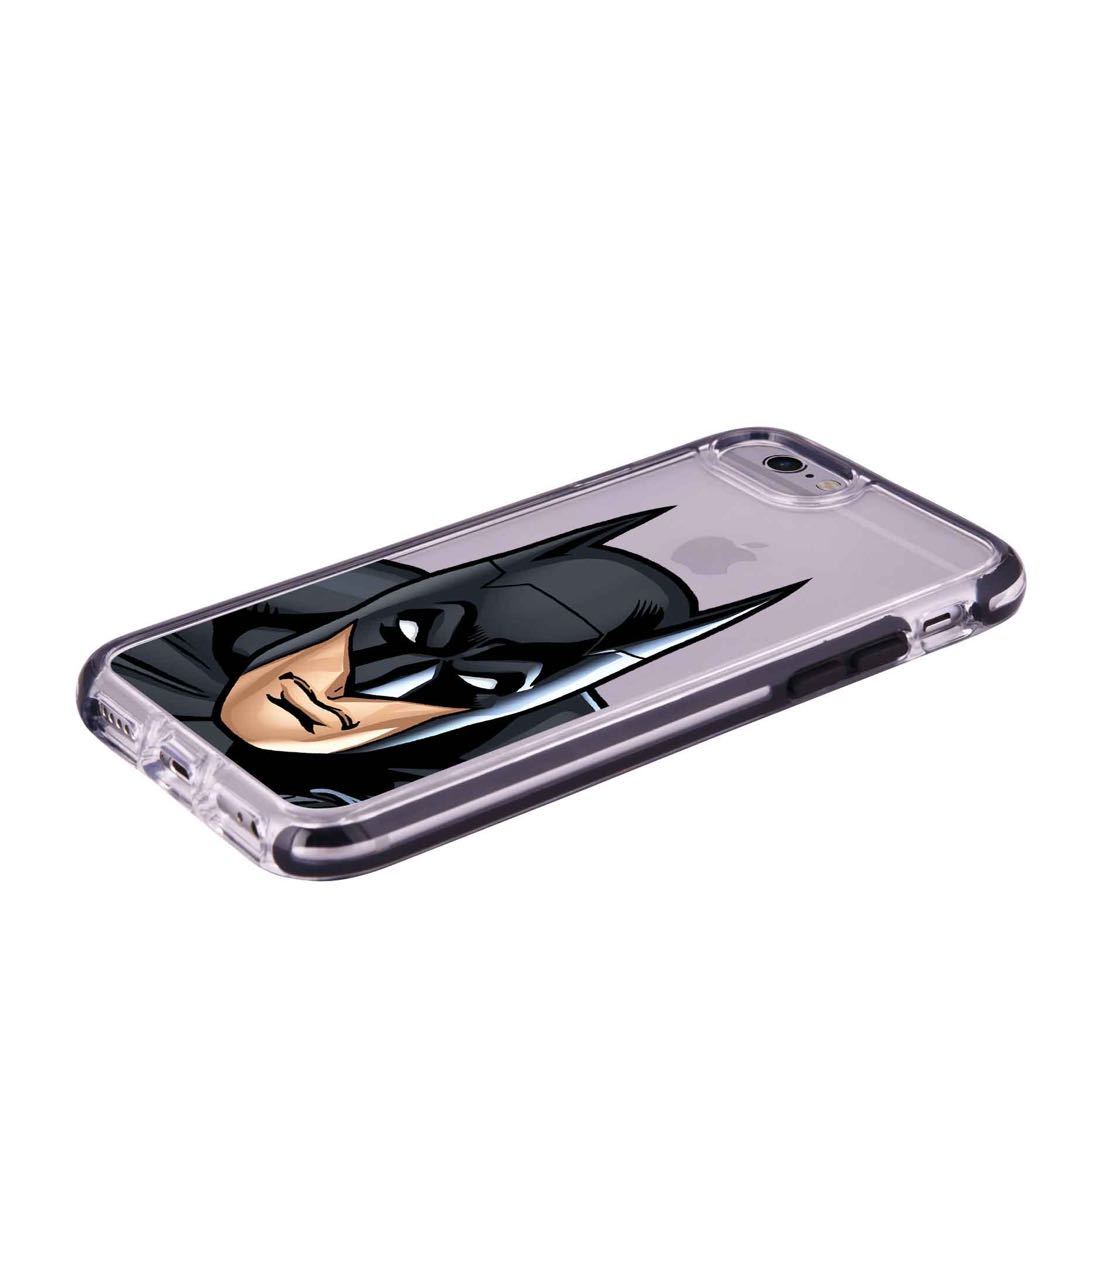 Fierce Batman - Extreme Phone Case for iPhone 6S Plus